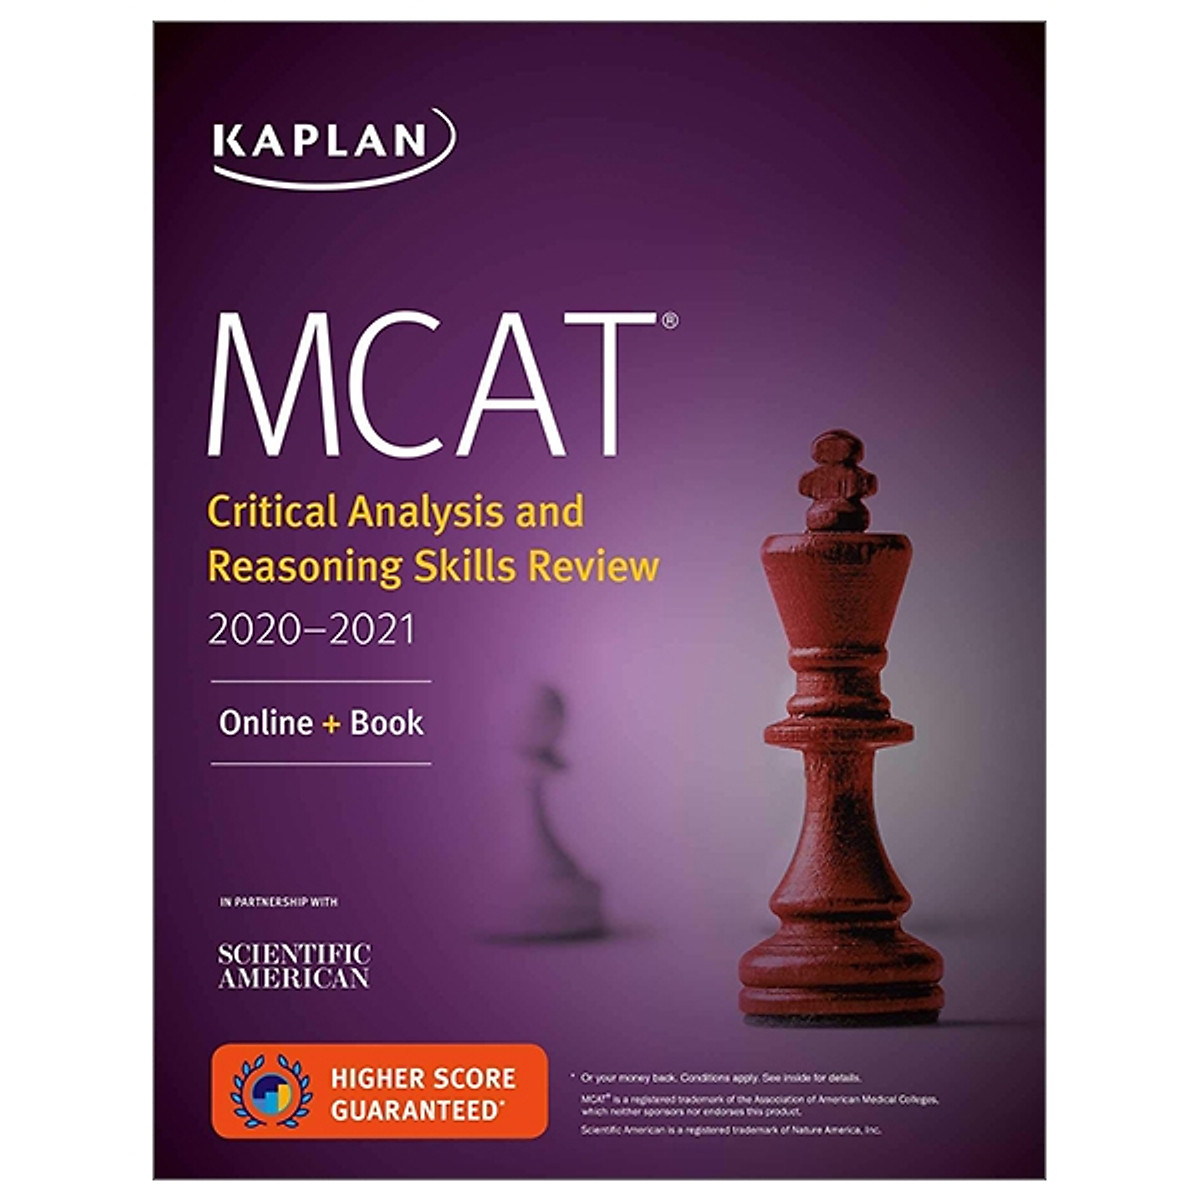 MCAT Critical Analysis And Reasoning Skills Review 2020-2021: Online + Book (Kaplan Test Prep)